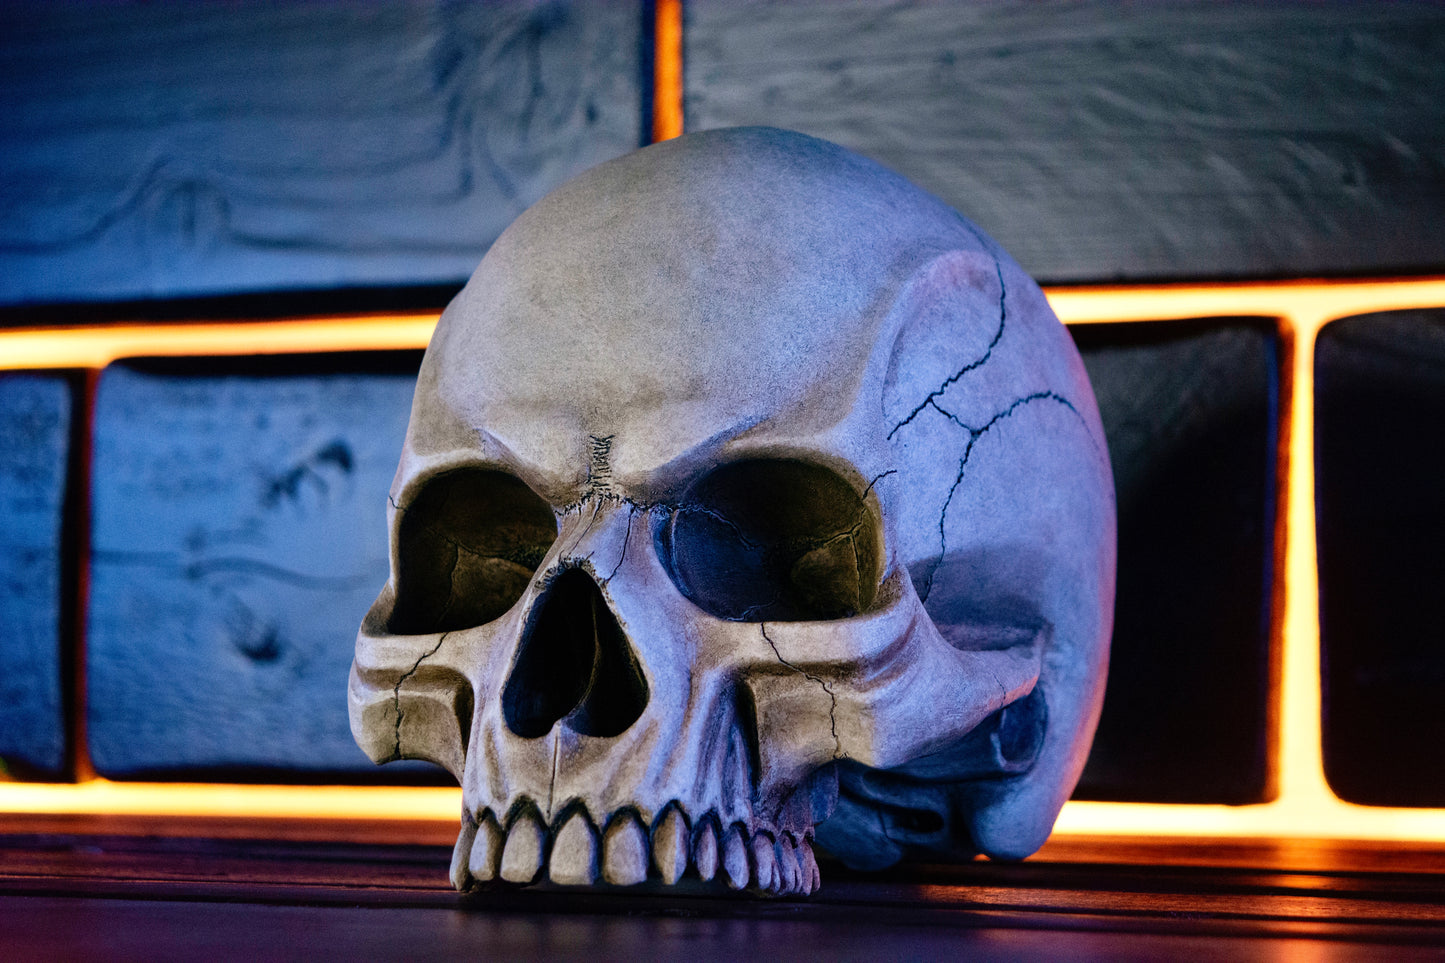 Angry Skull "Old Bones"